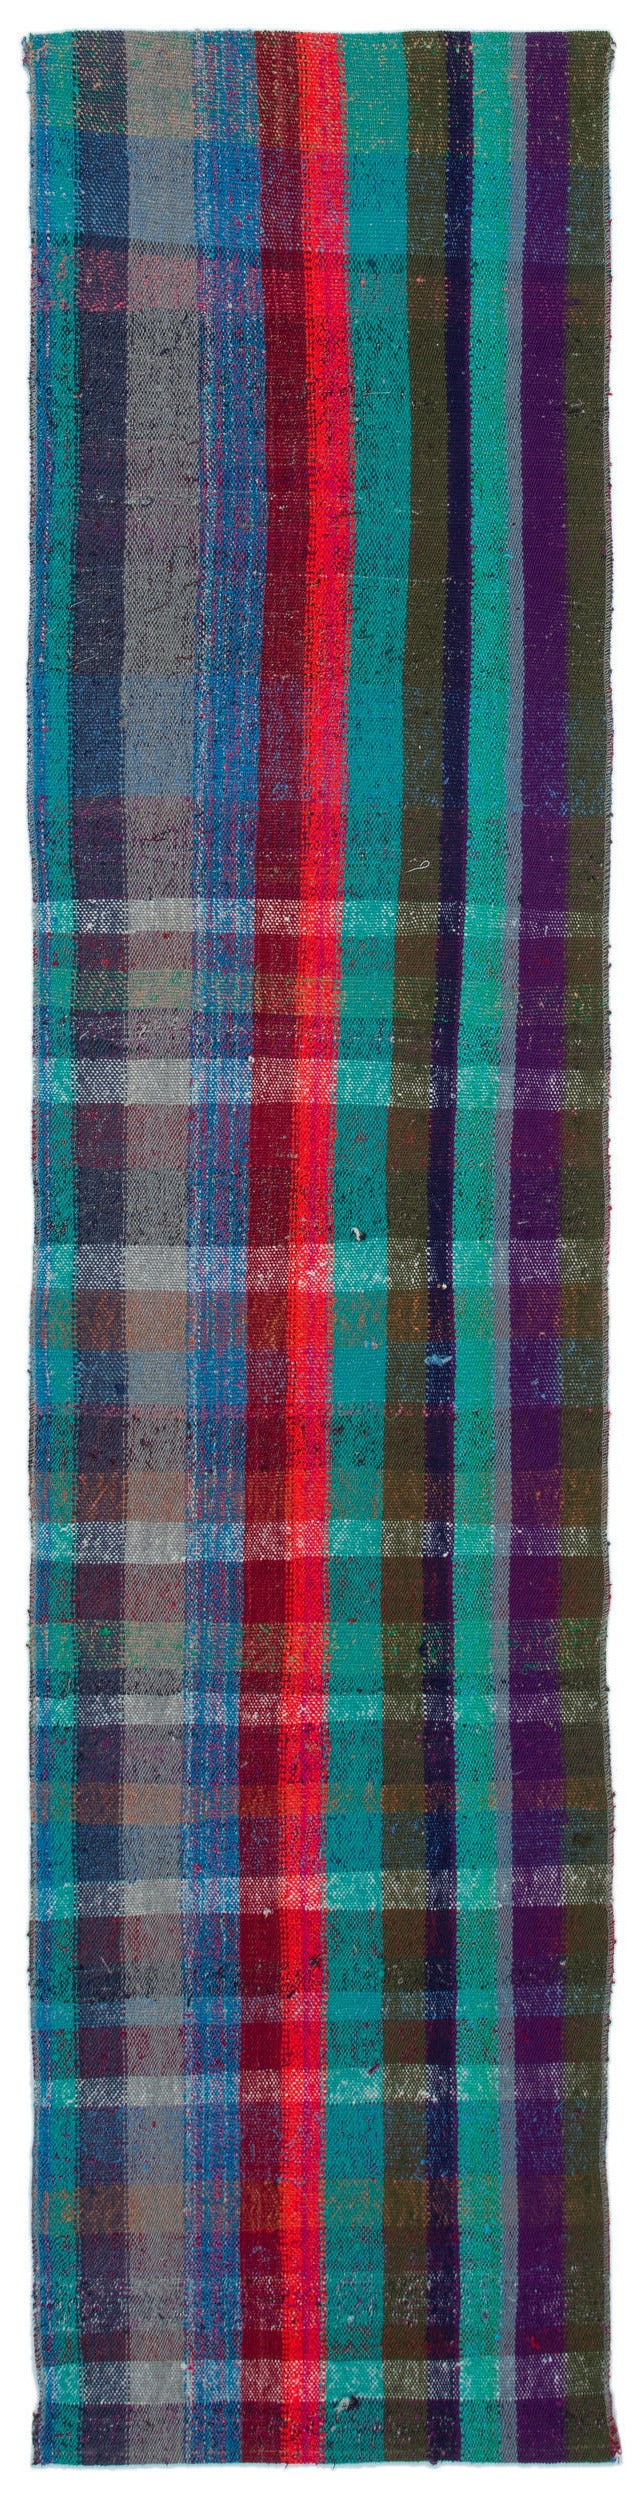 Cretan Gray Striped Wool Hand-Woven Carpet 057 x 244